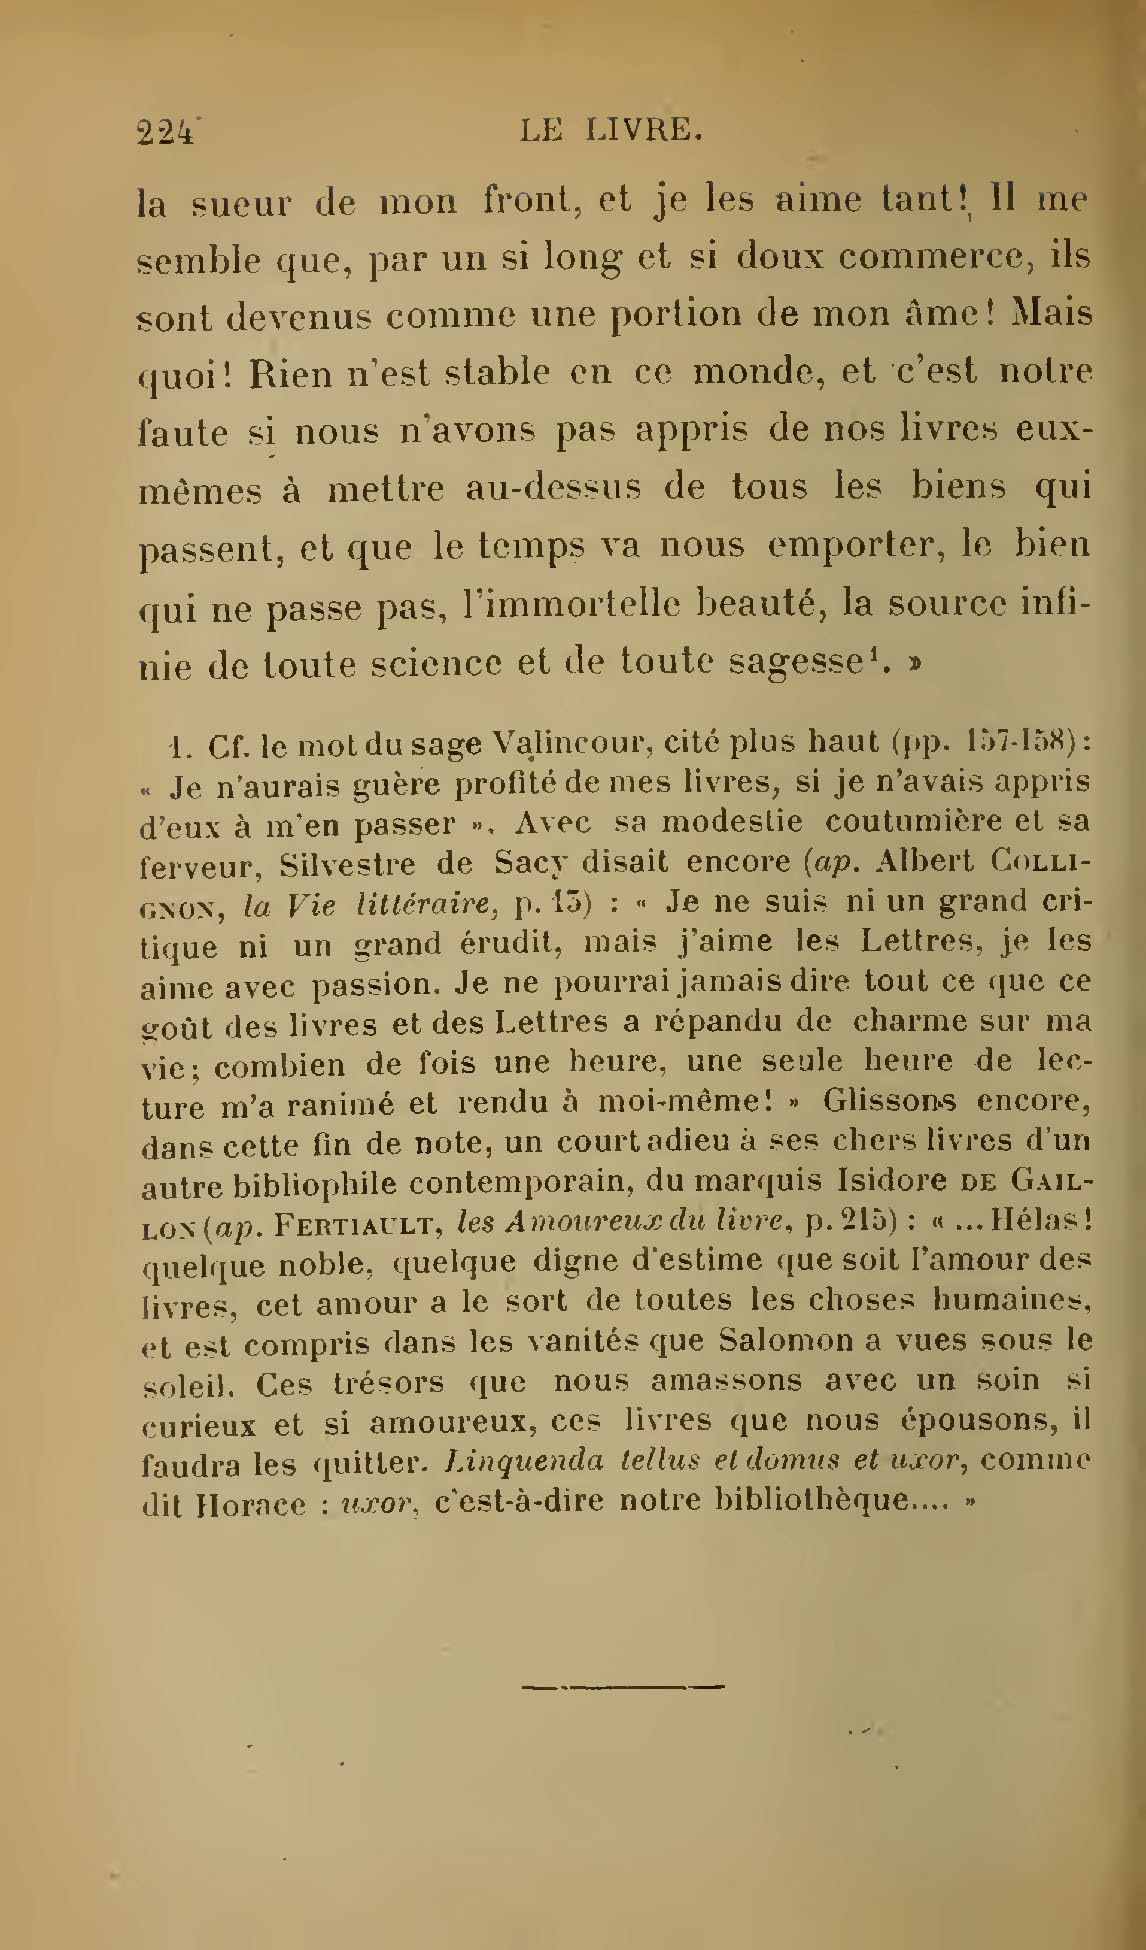 Albert Cim, Le Livre, t. I, p. 224.